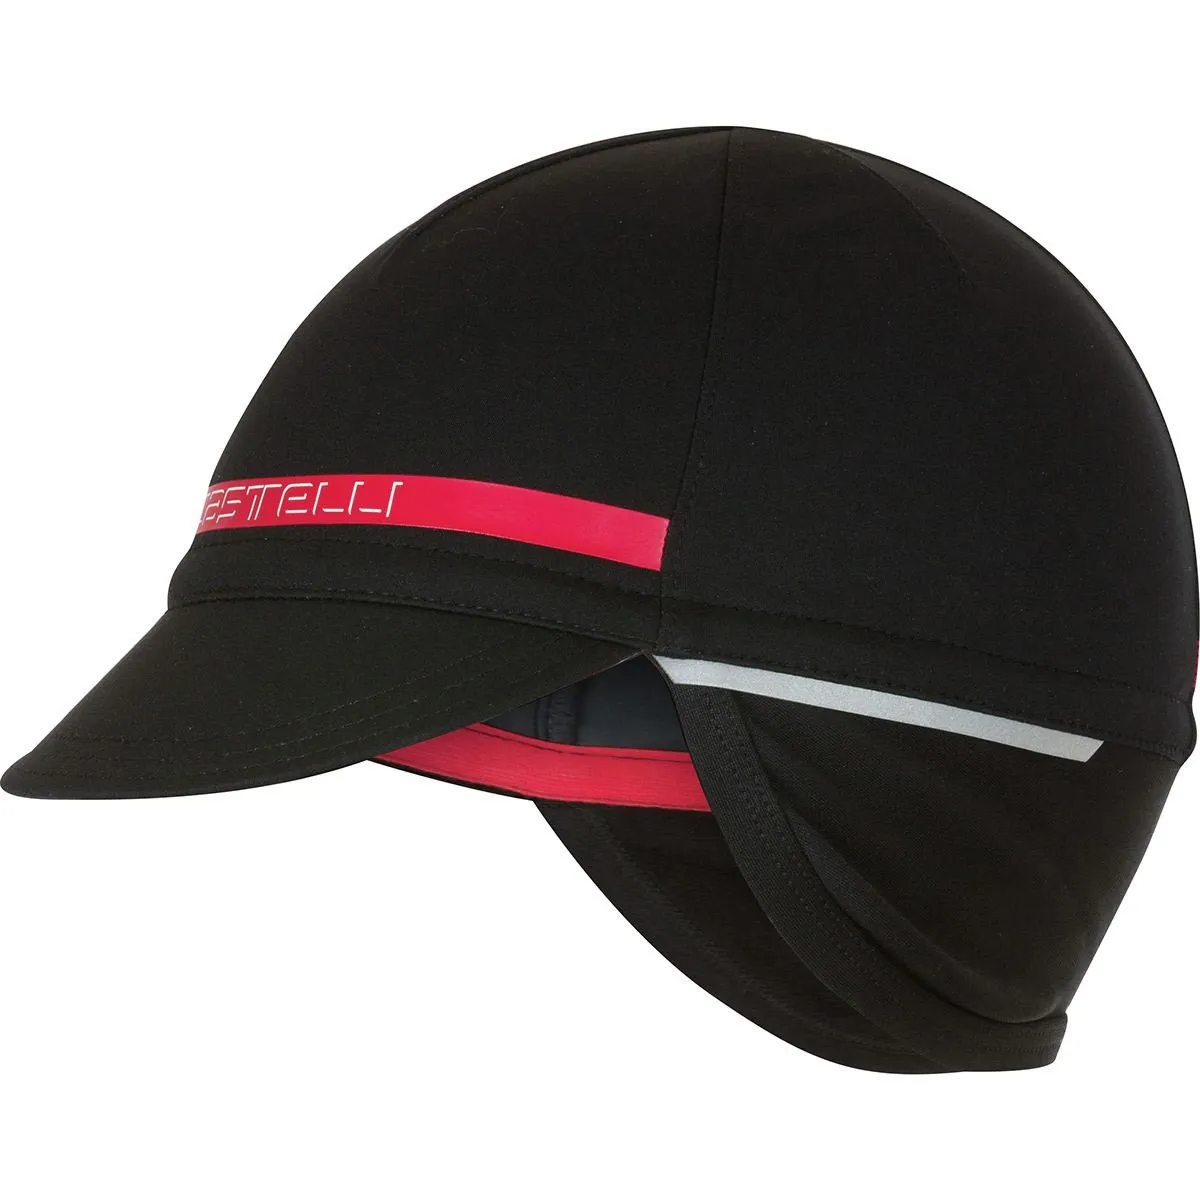 Black and red bike hat